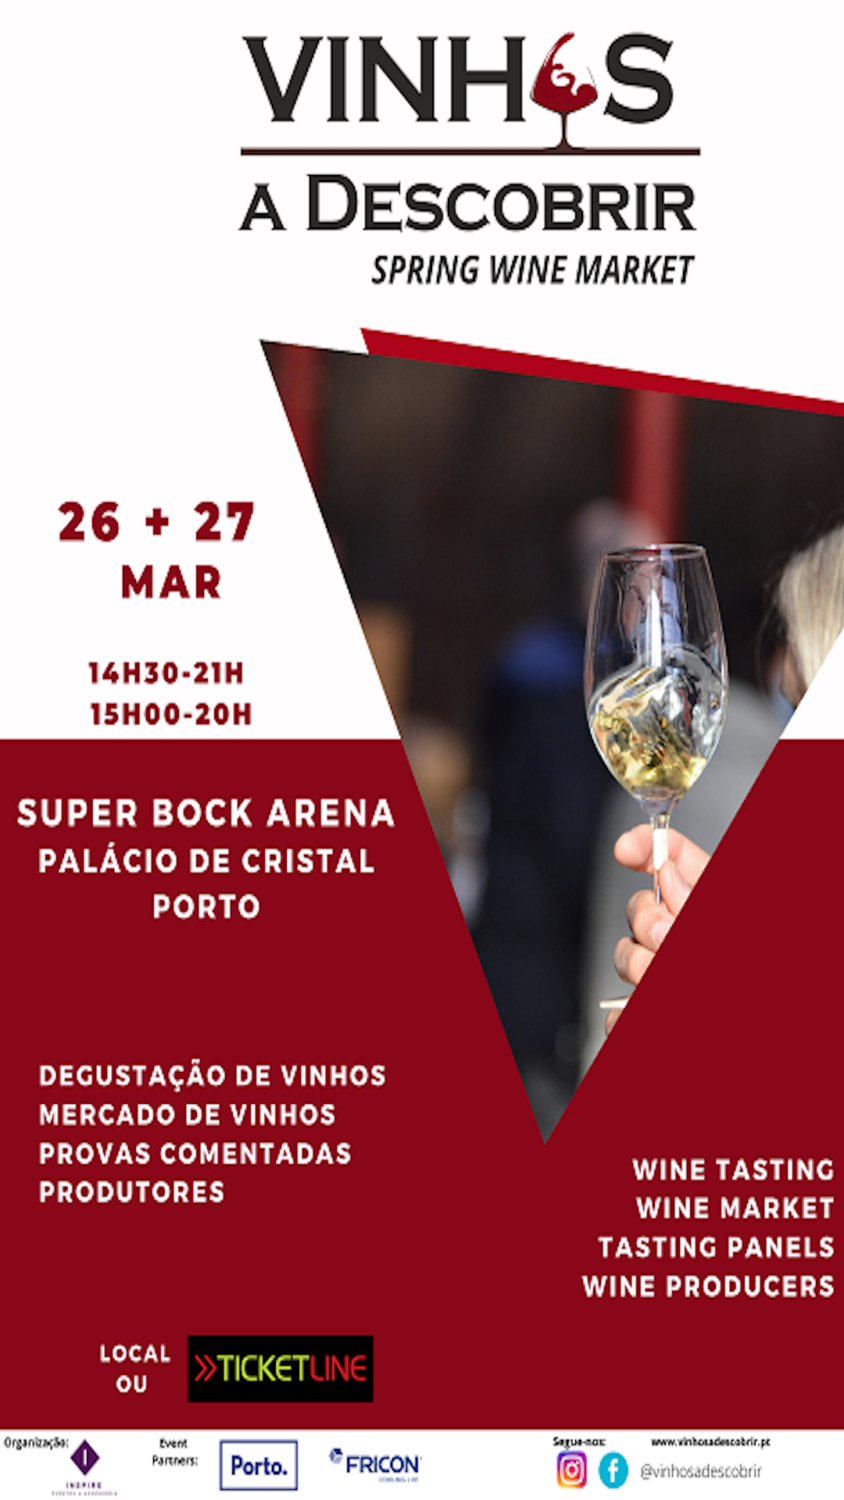 VINHOS A DESCOBRIR - Spring Wine Market